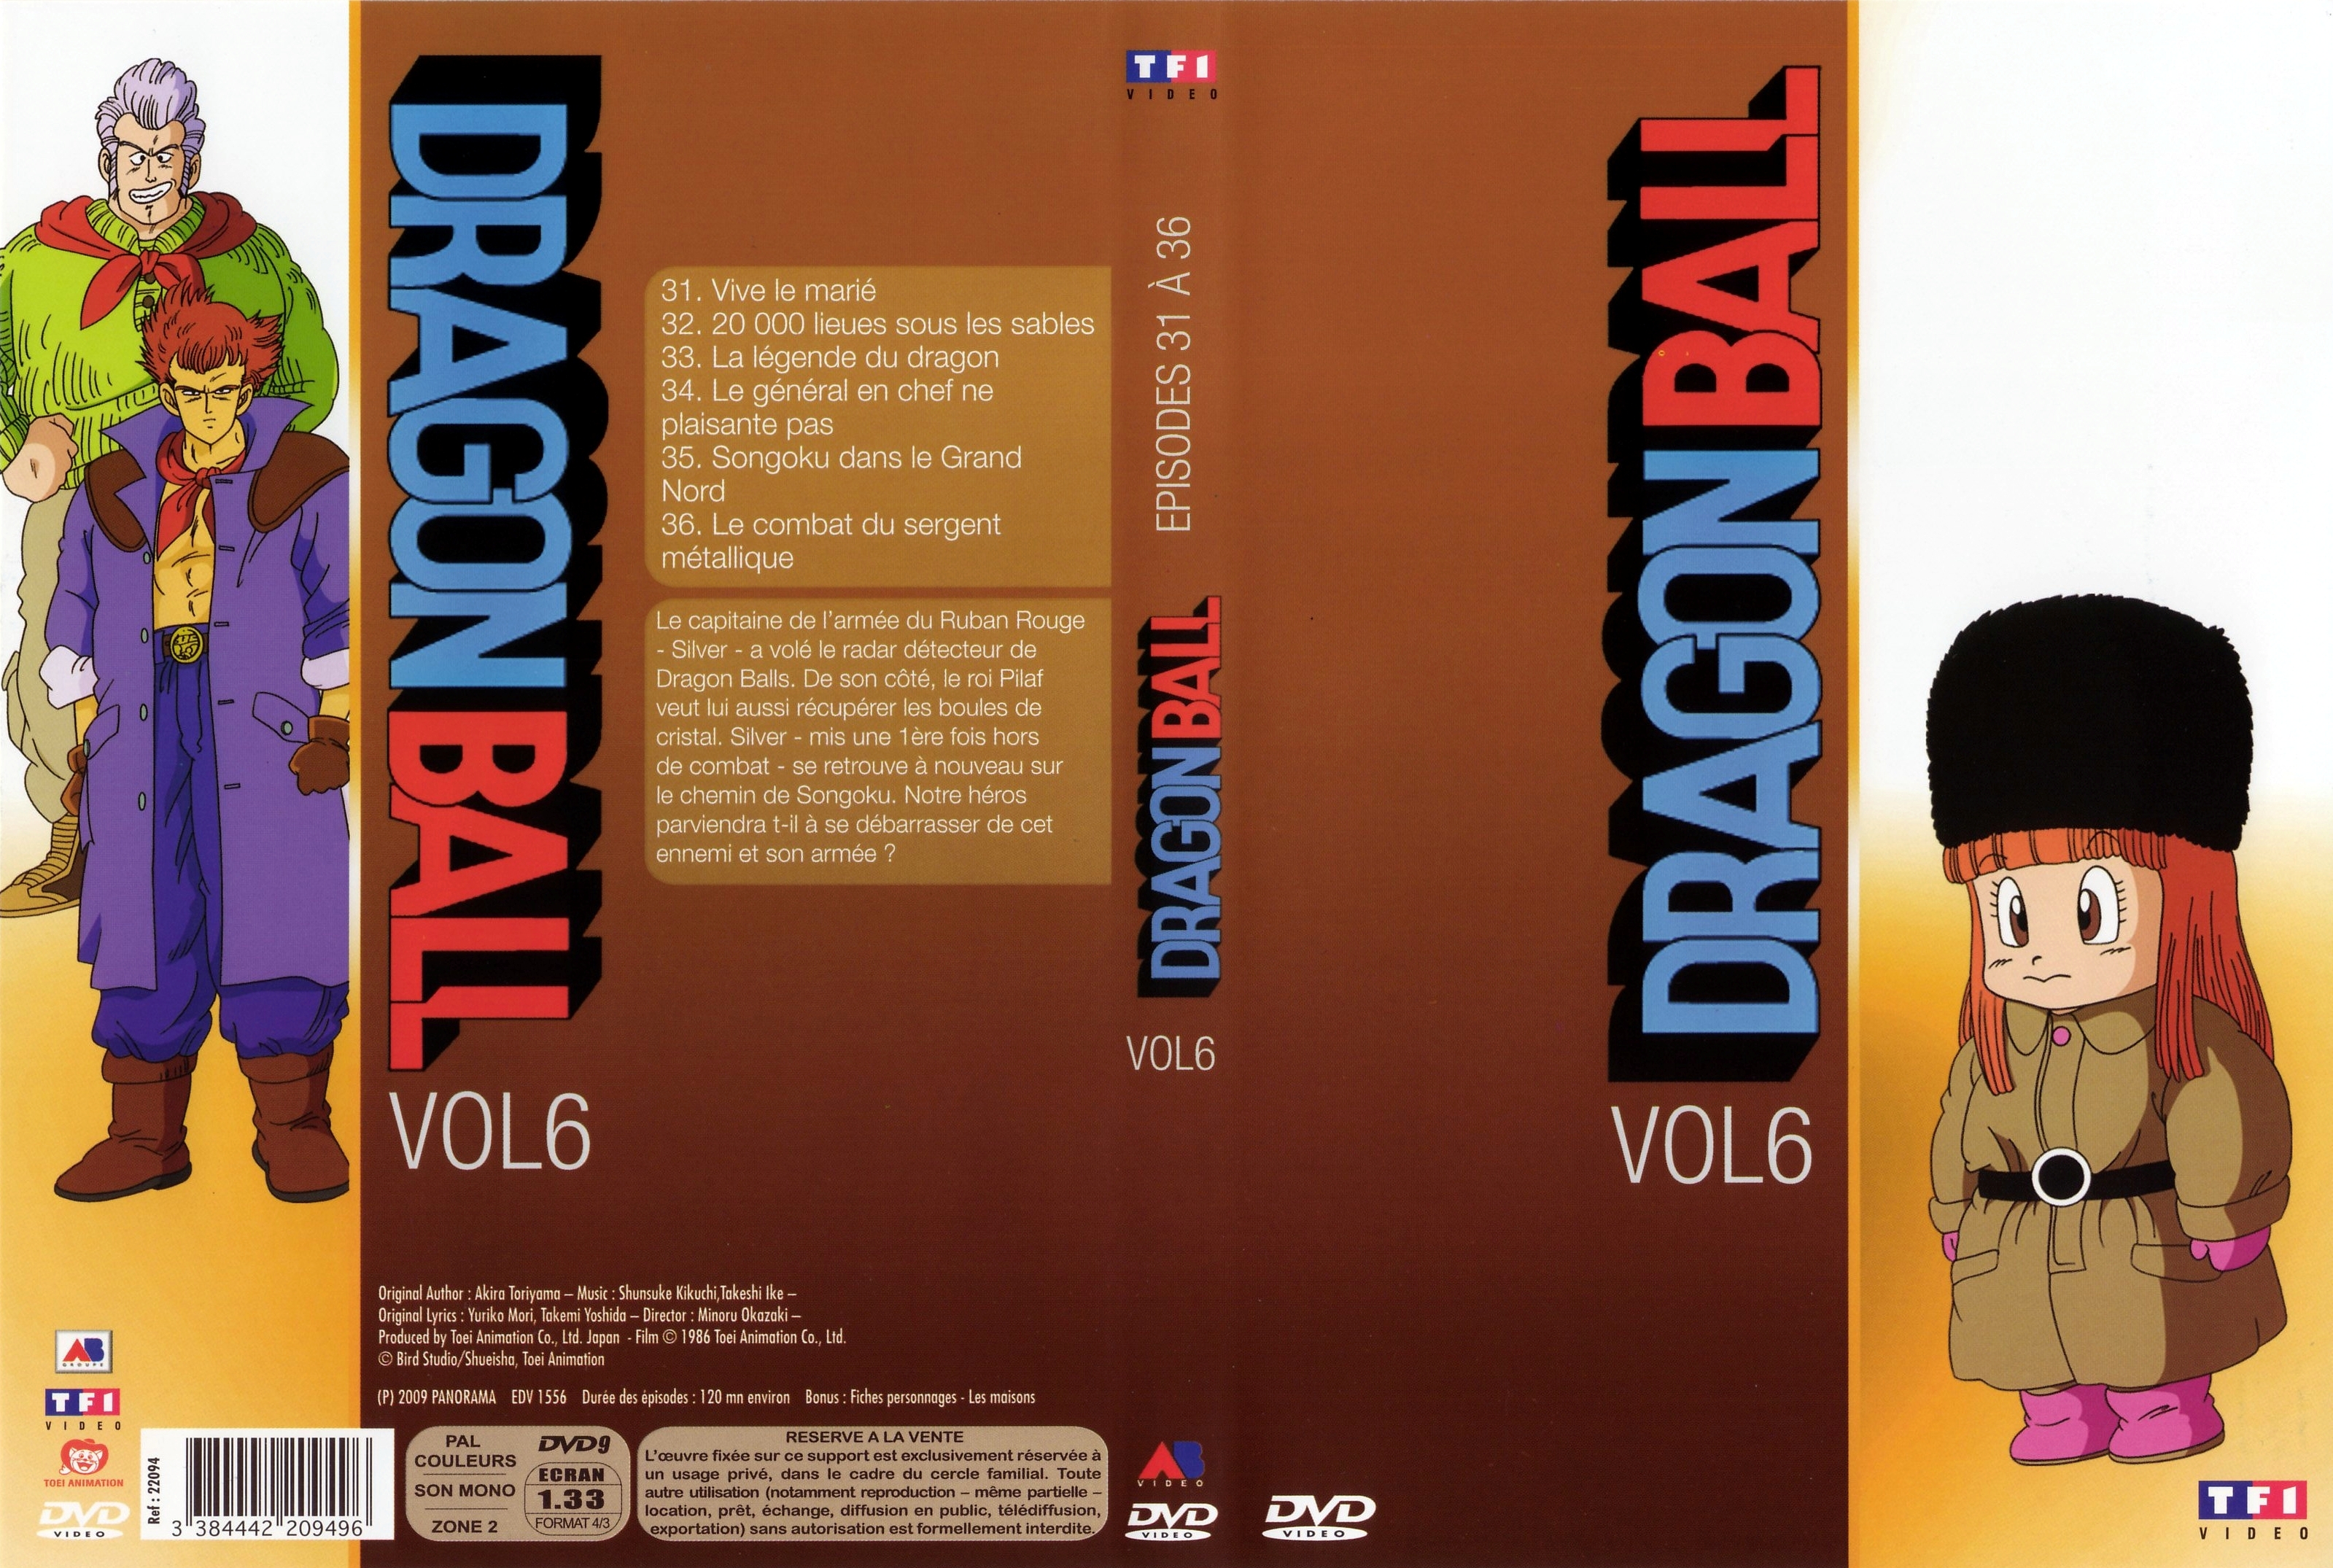 Jaquette DVD Dragon ball vol 06 v2